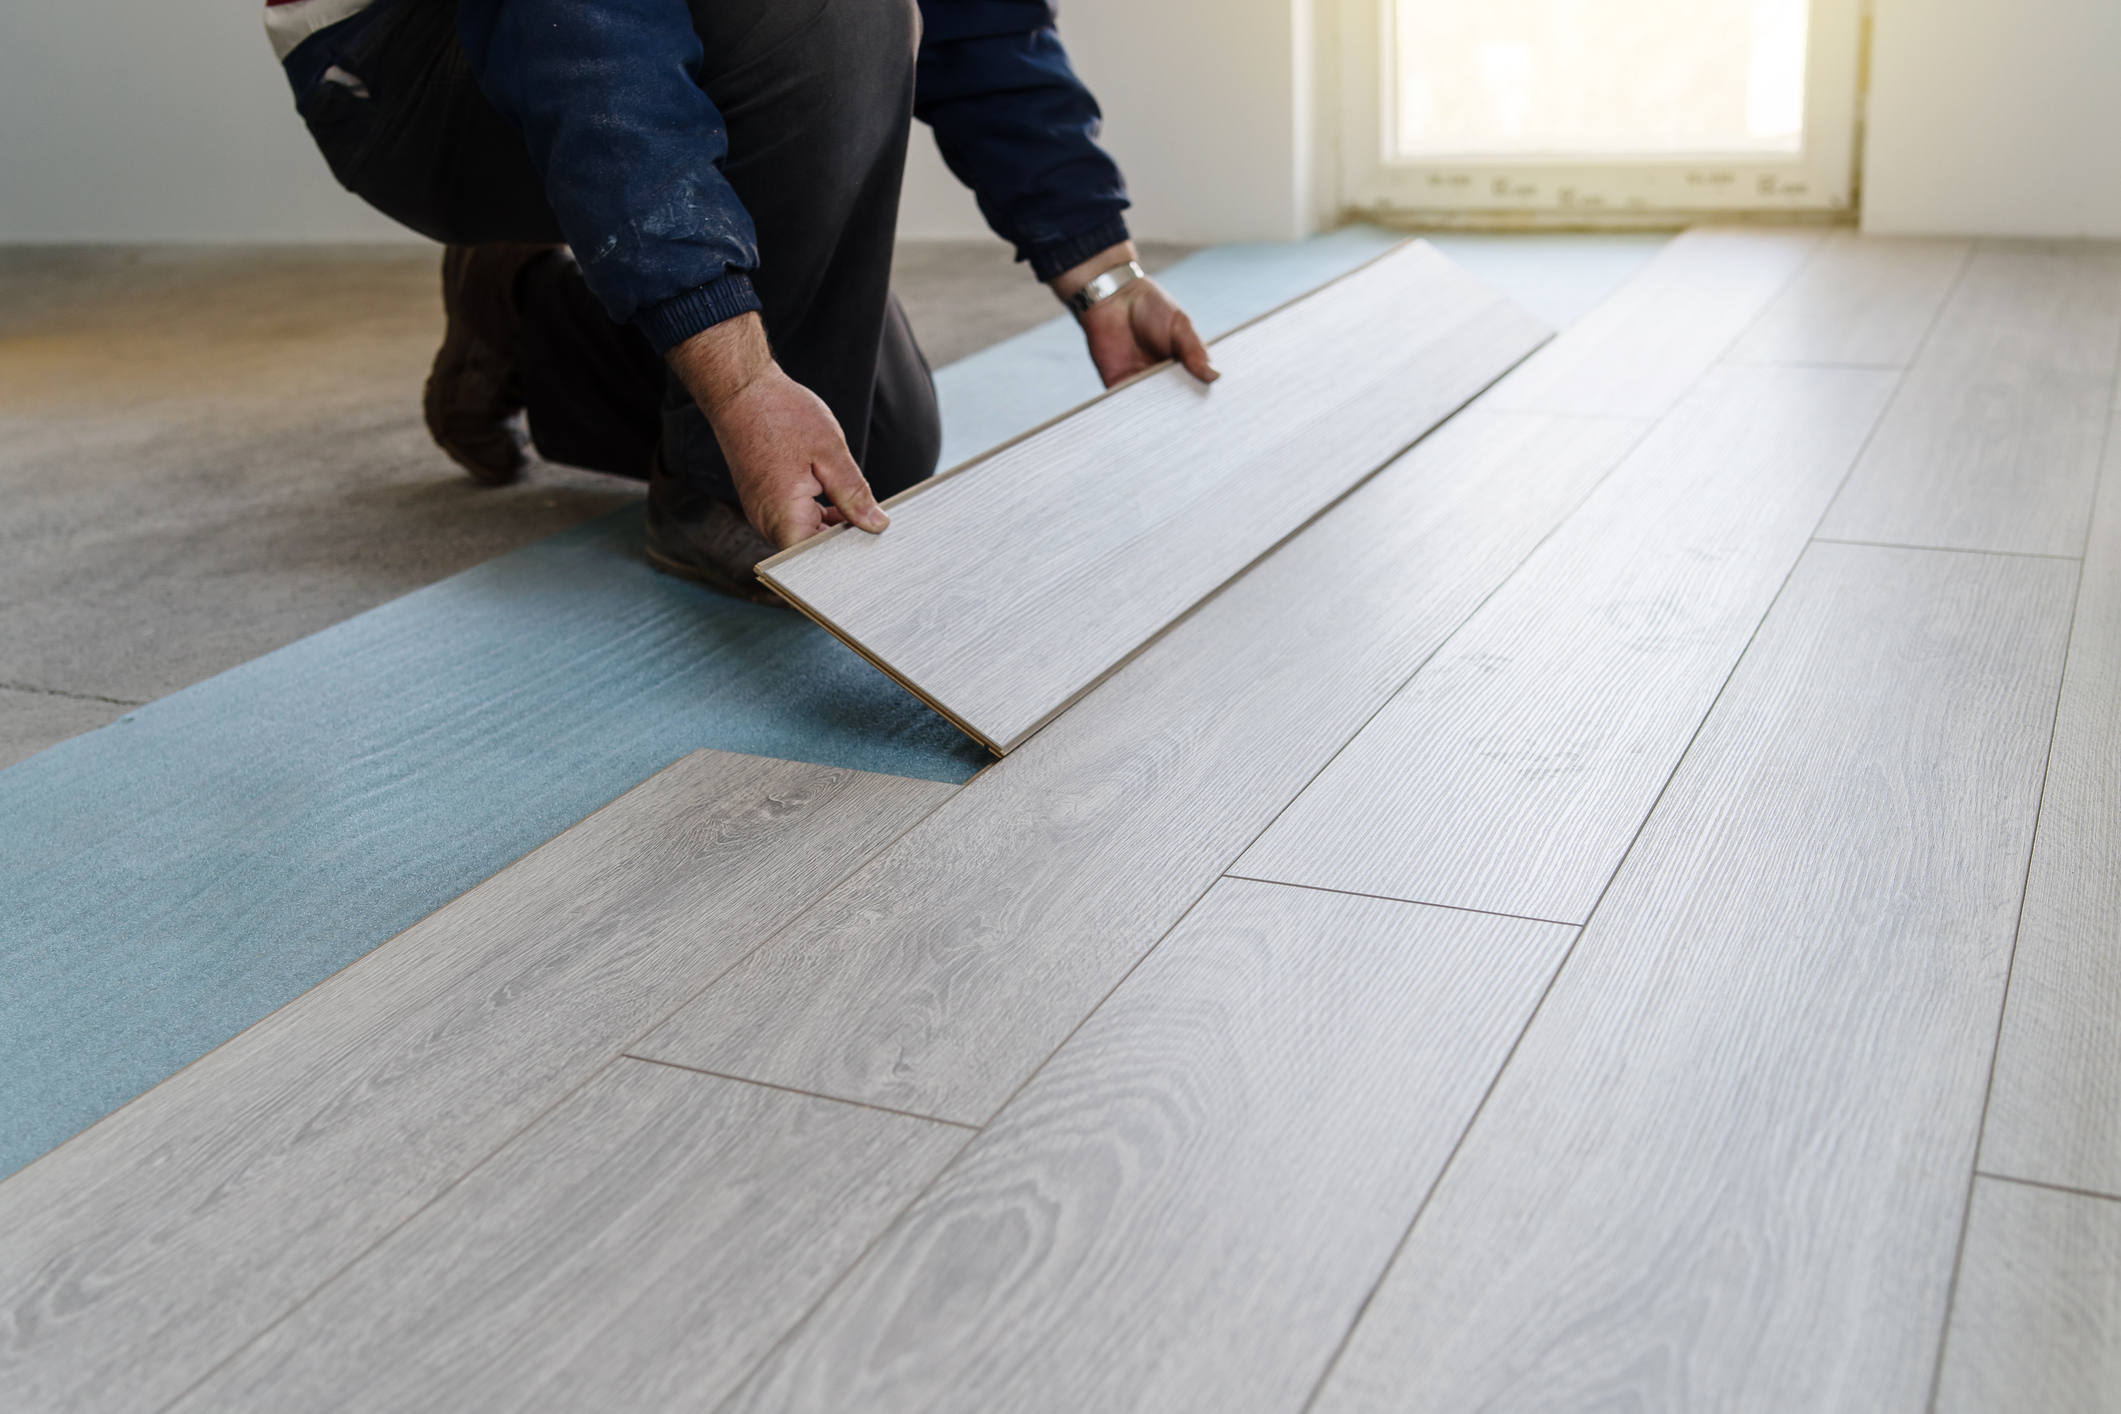 Temporary Flooring Ideas, Laminate Floor Rugs